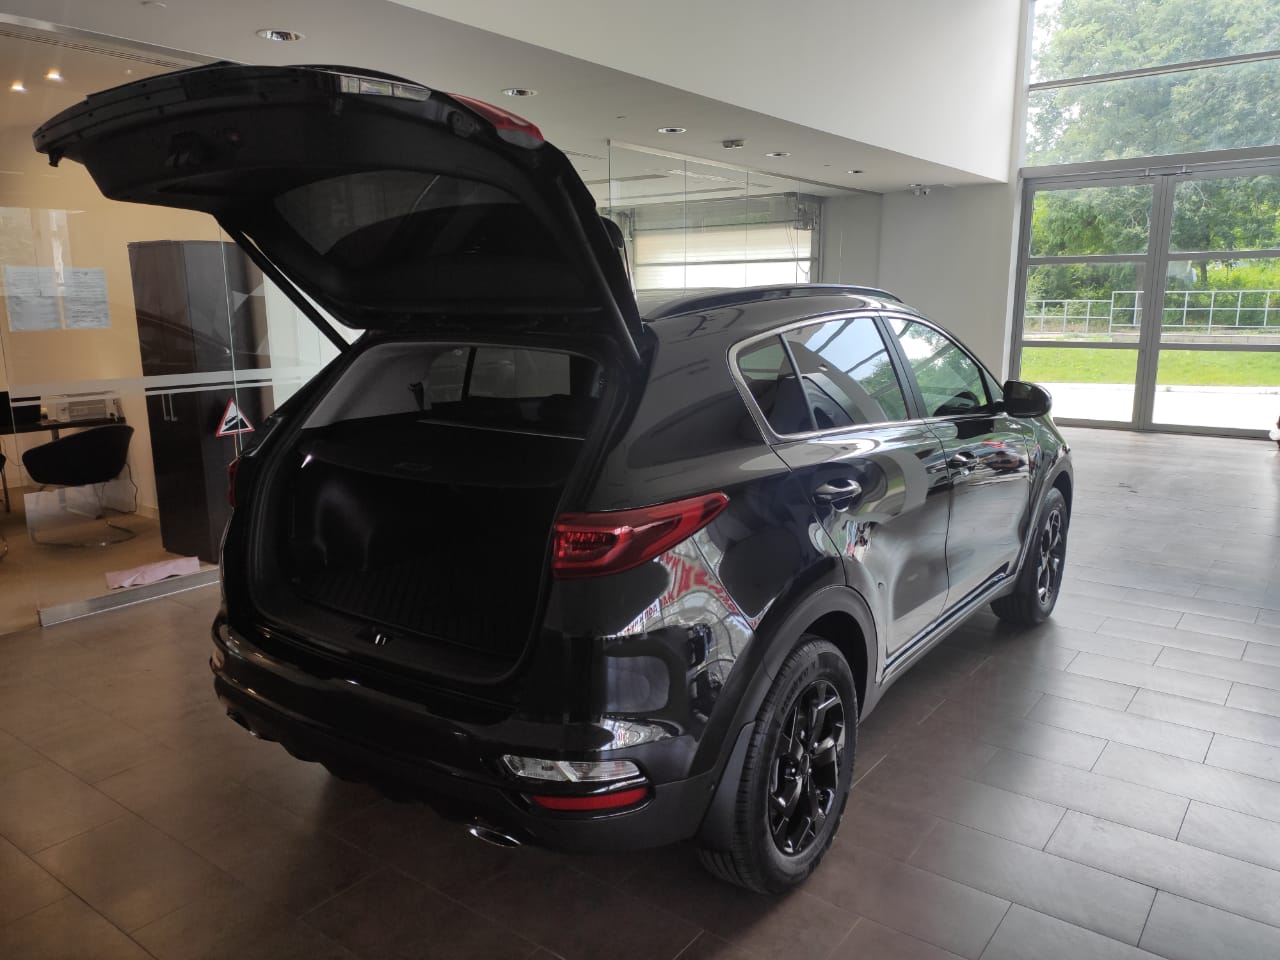 Kia Sportage 2.4 GDI., 184 л.c., бензин., Автомат 6AT., Полный 4WD., Premium Black Edition., 2021